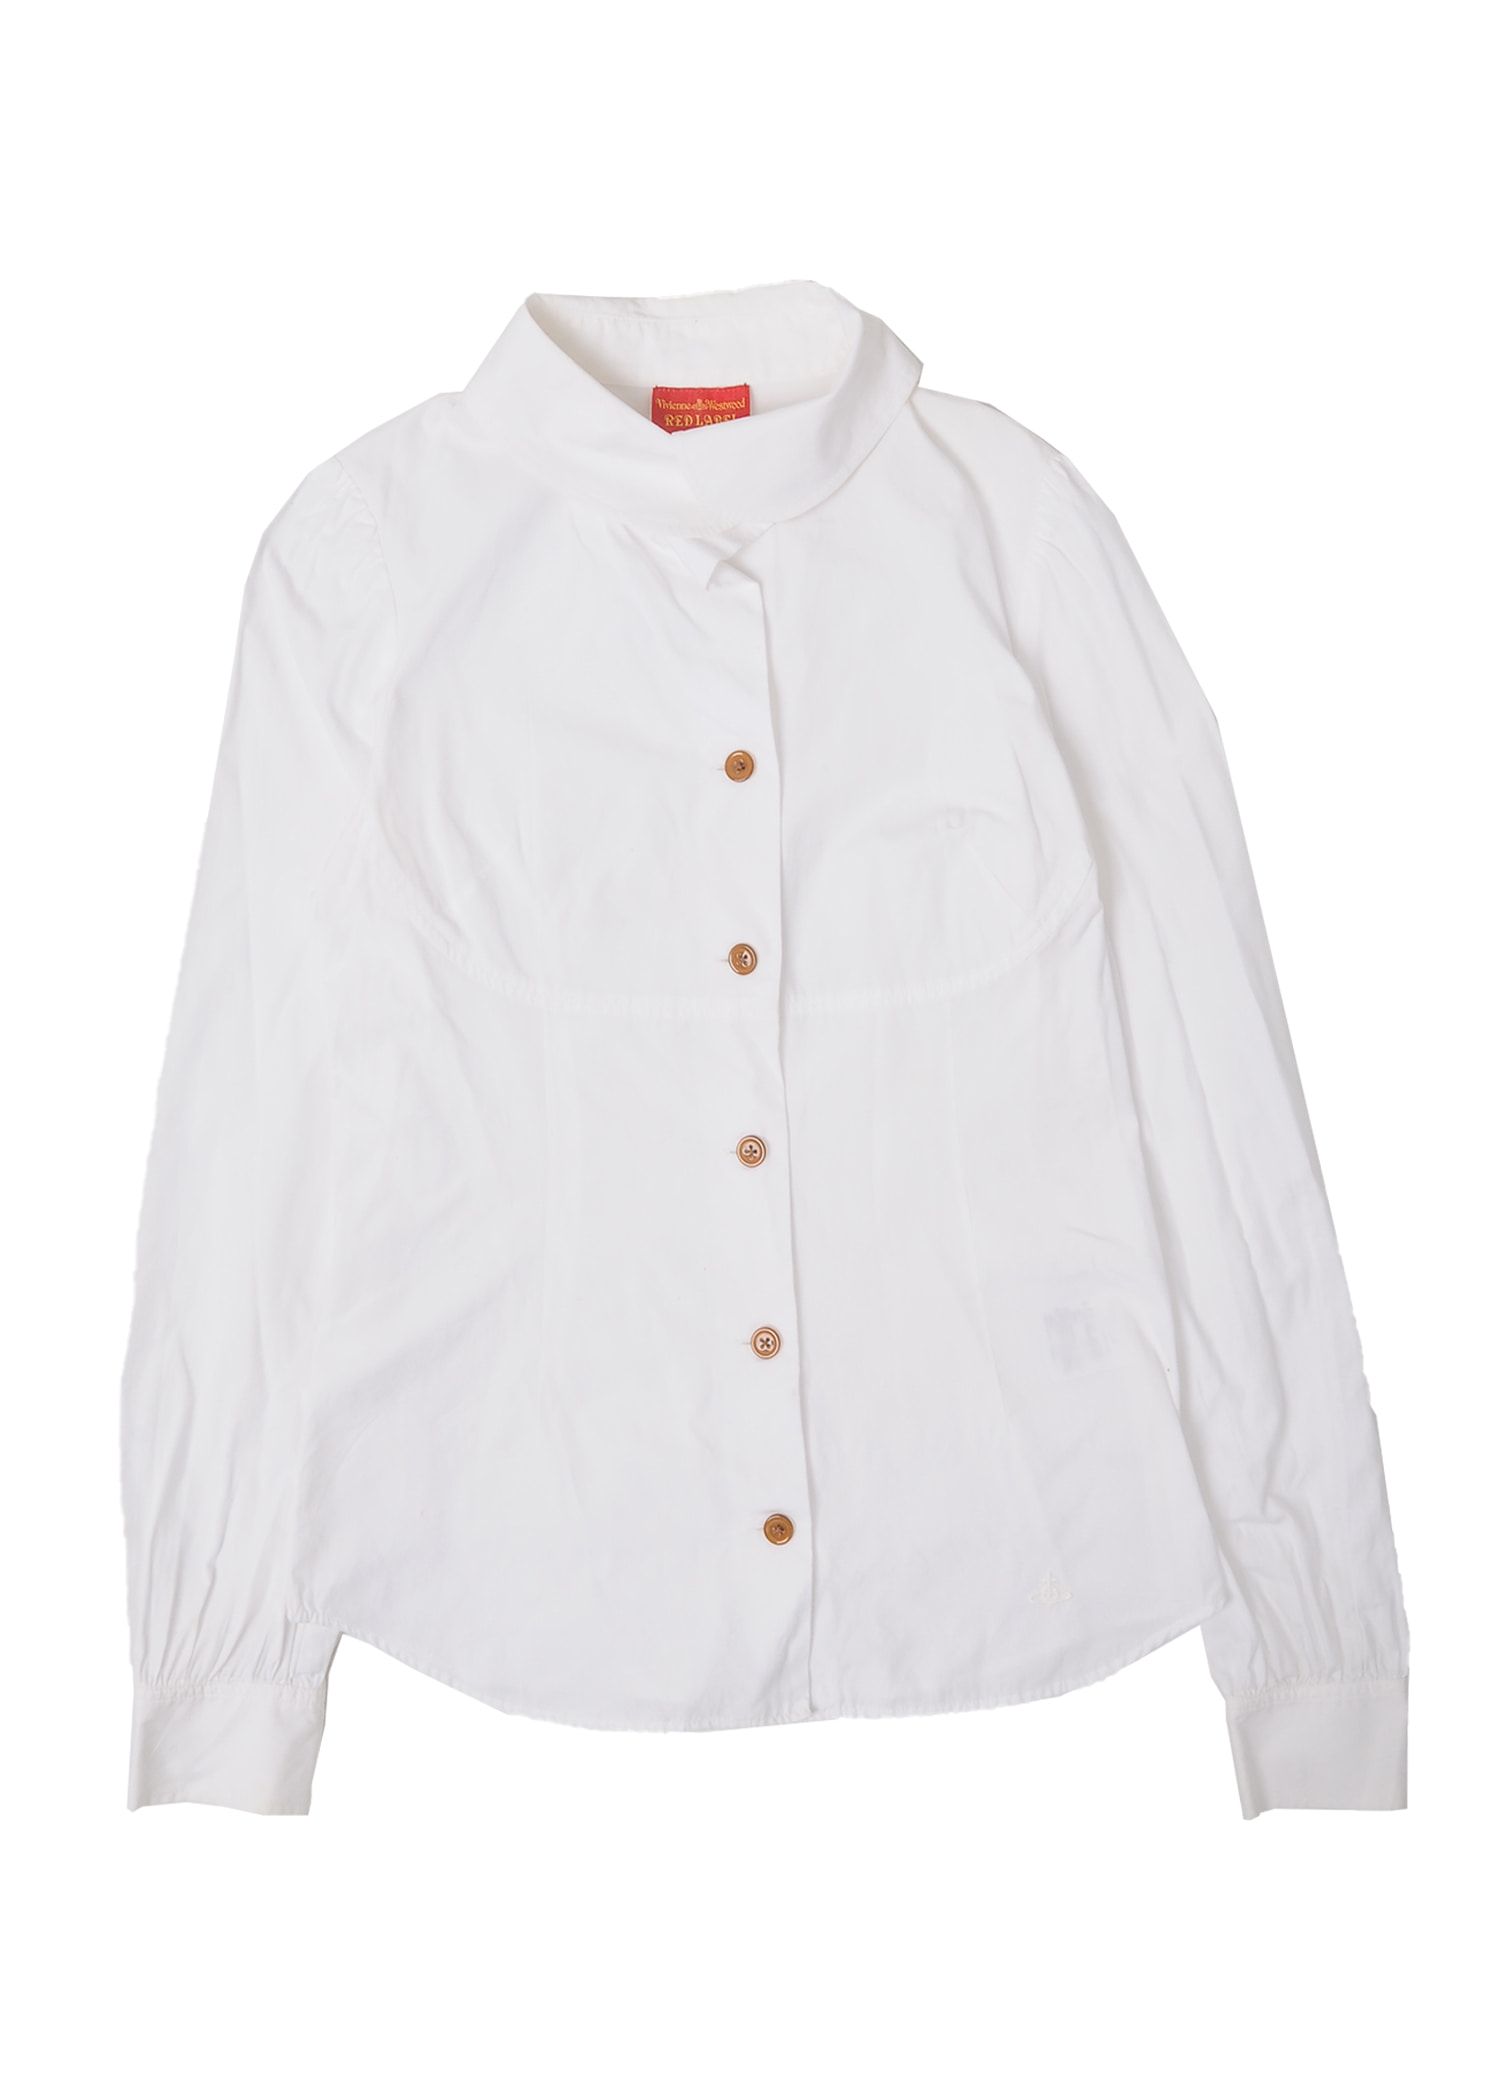 Vivienne Westwood white shirts